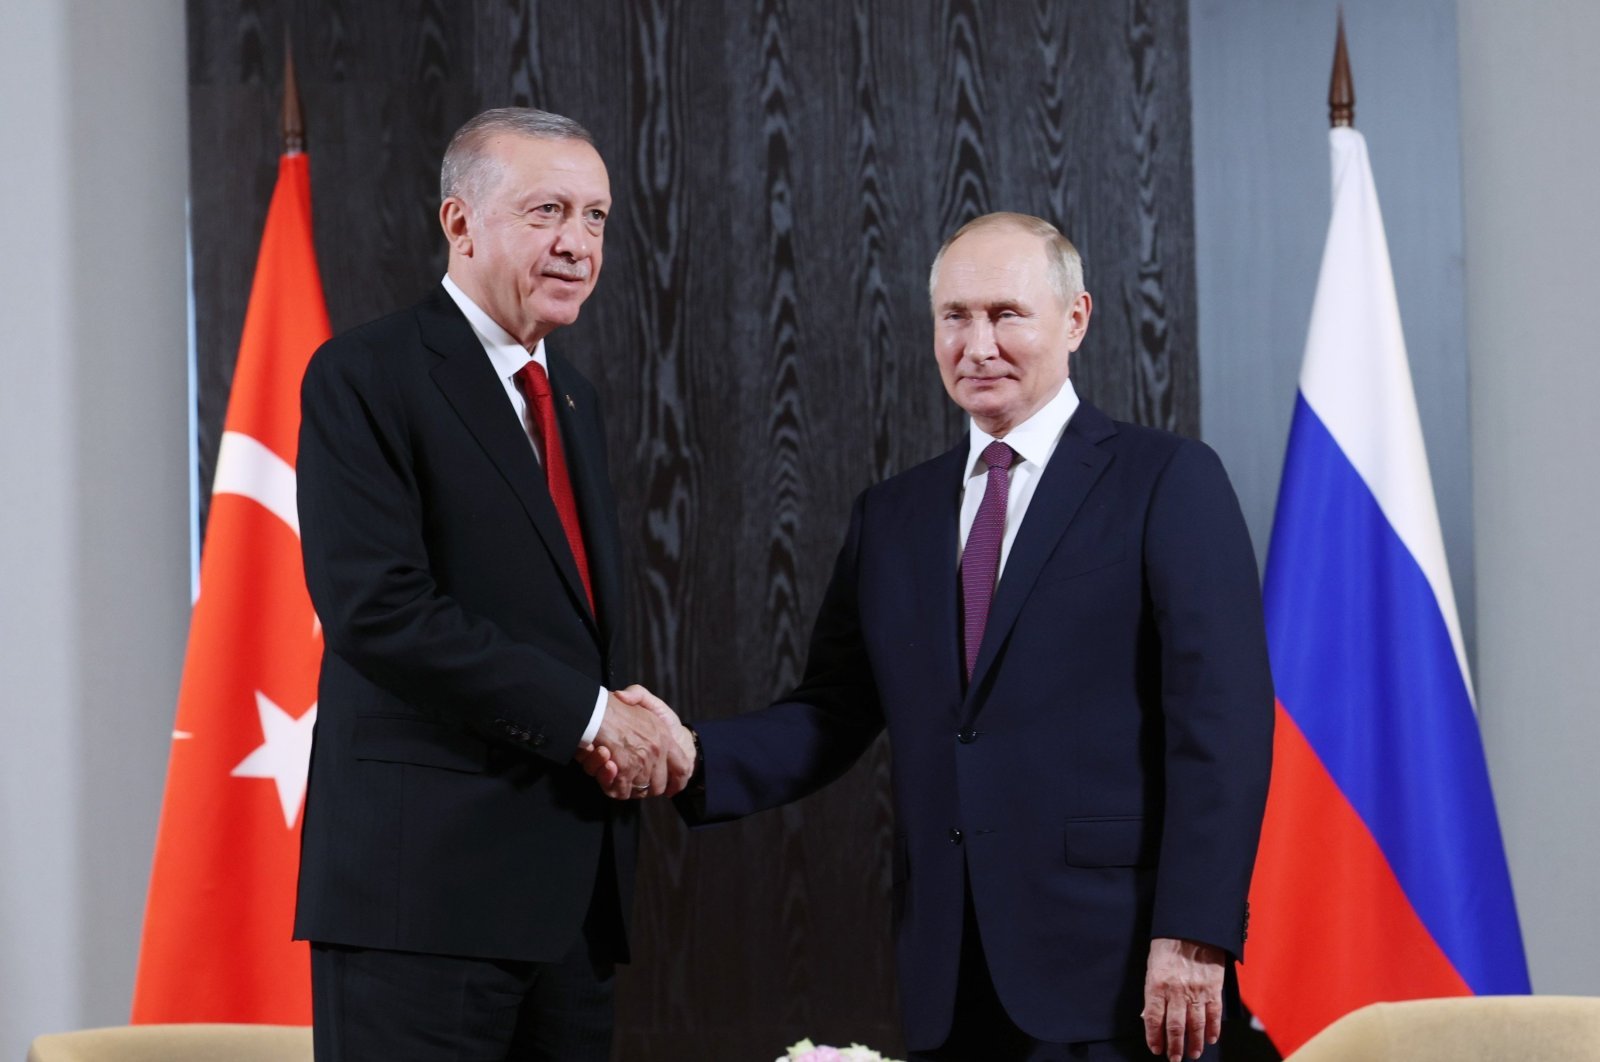 Erdogan to meet Putin next week in Russia for grain deal